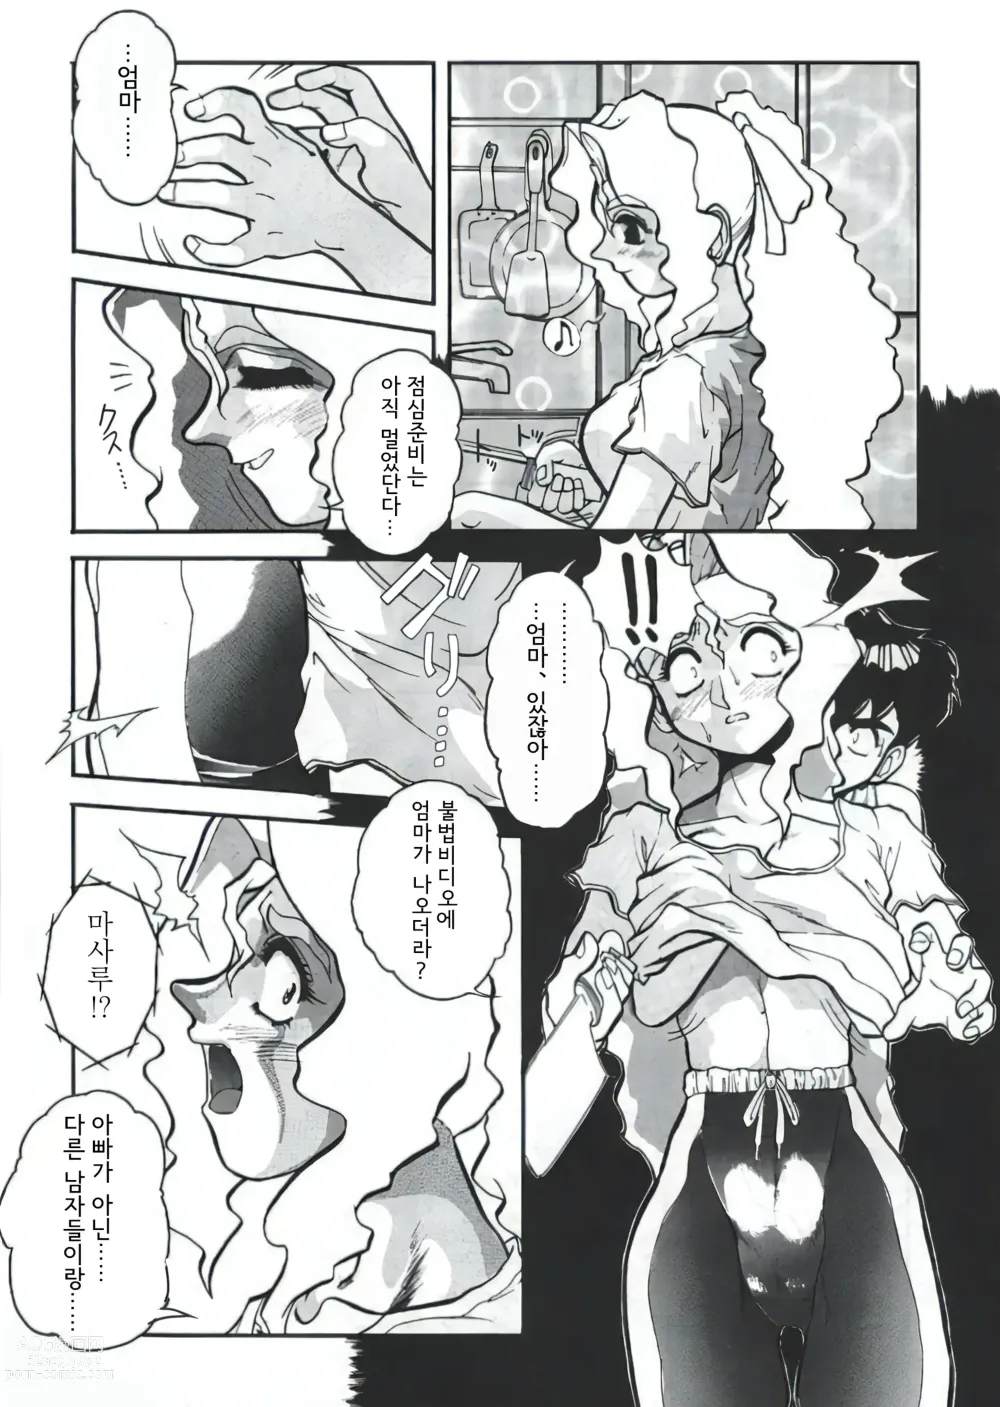 Page 5 of manga Nozzle (decensored)